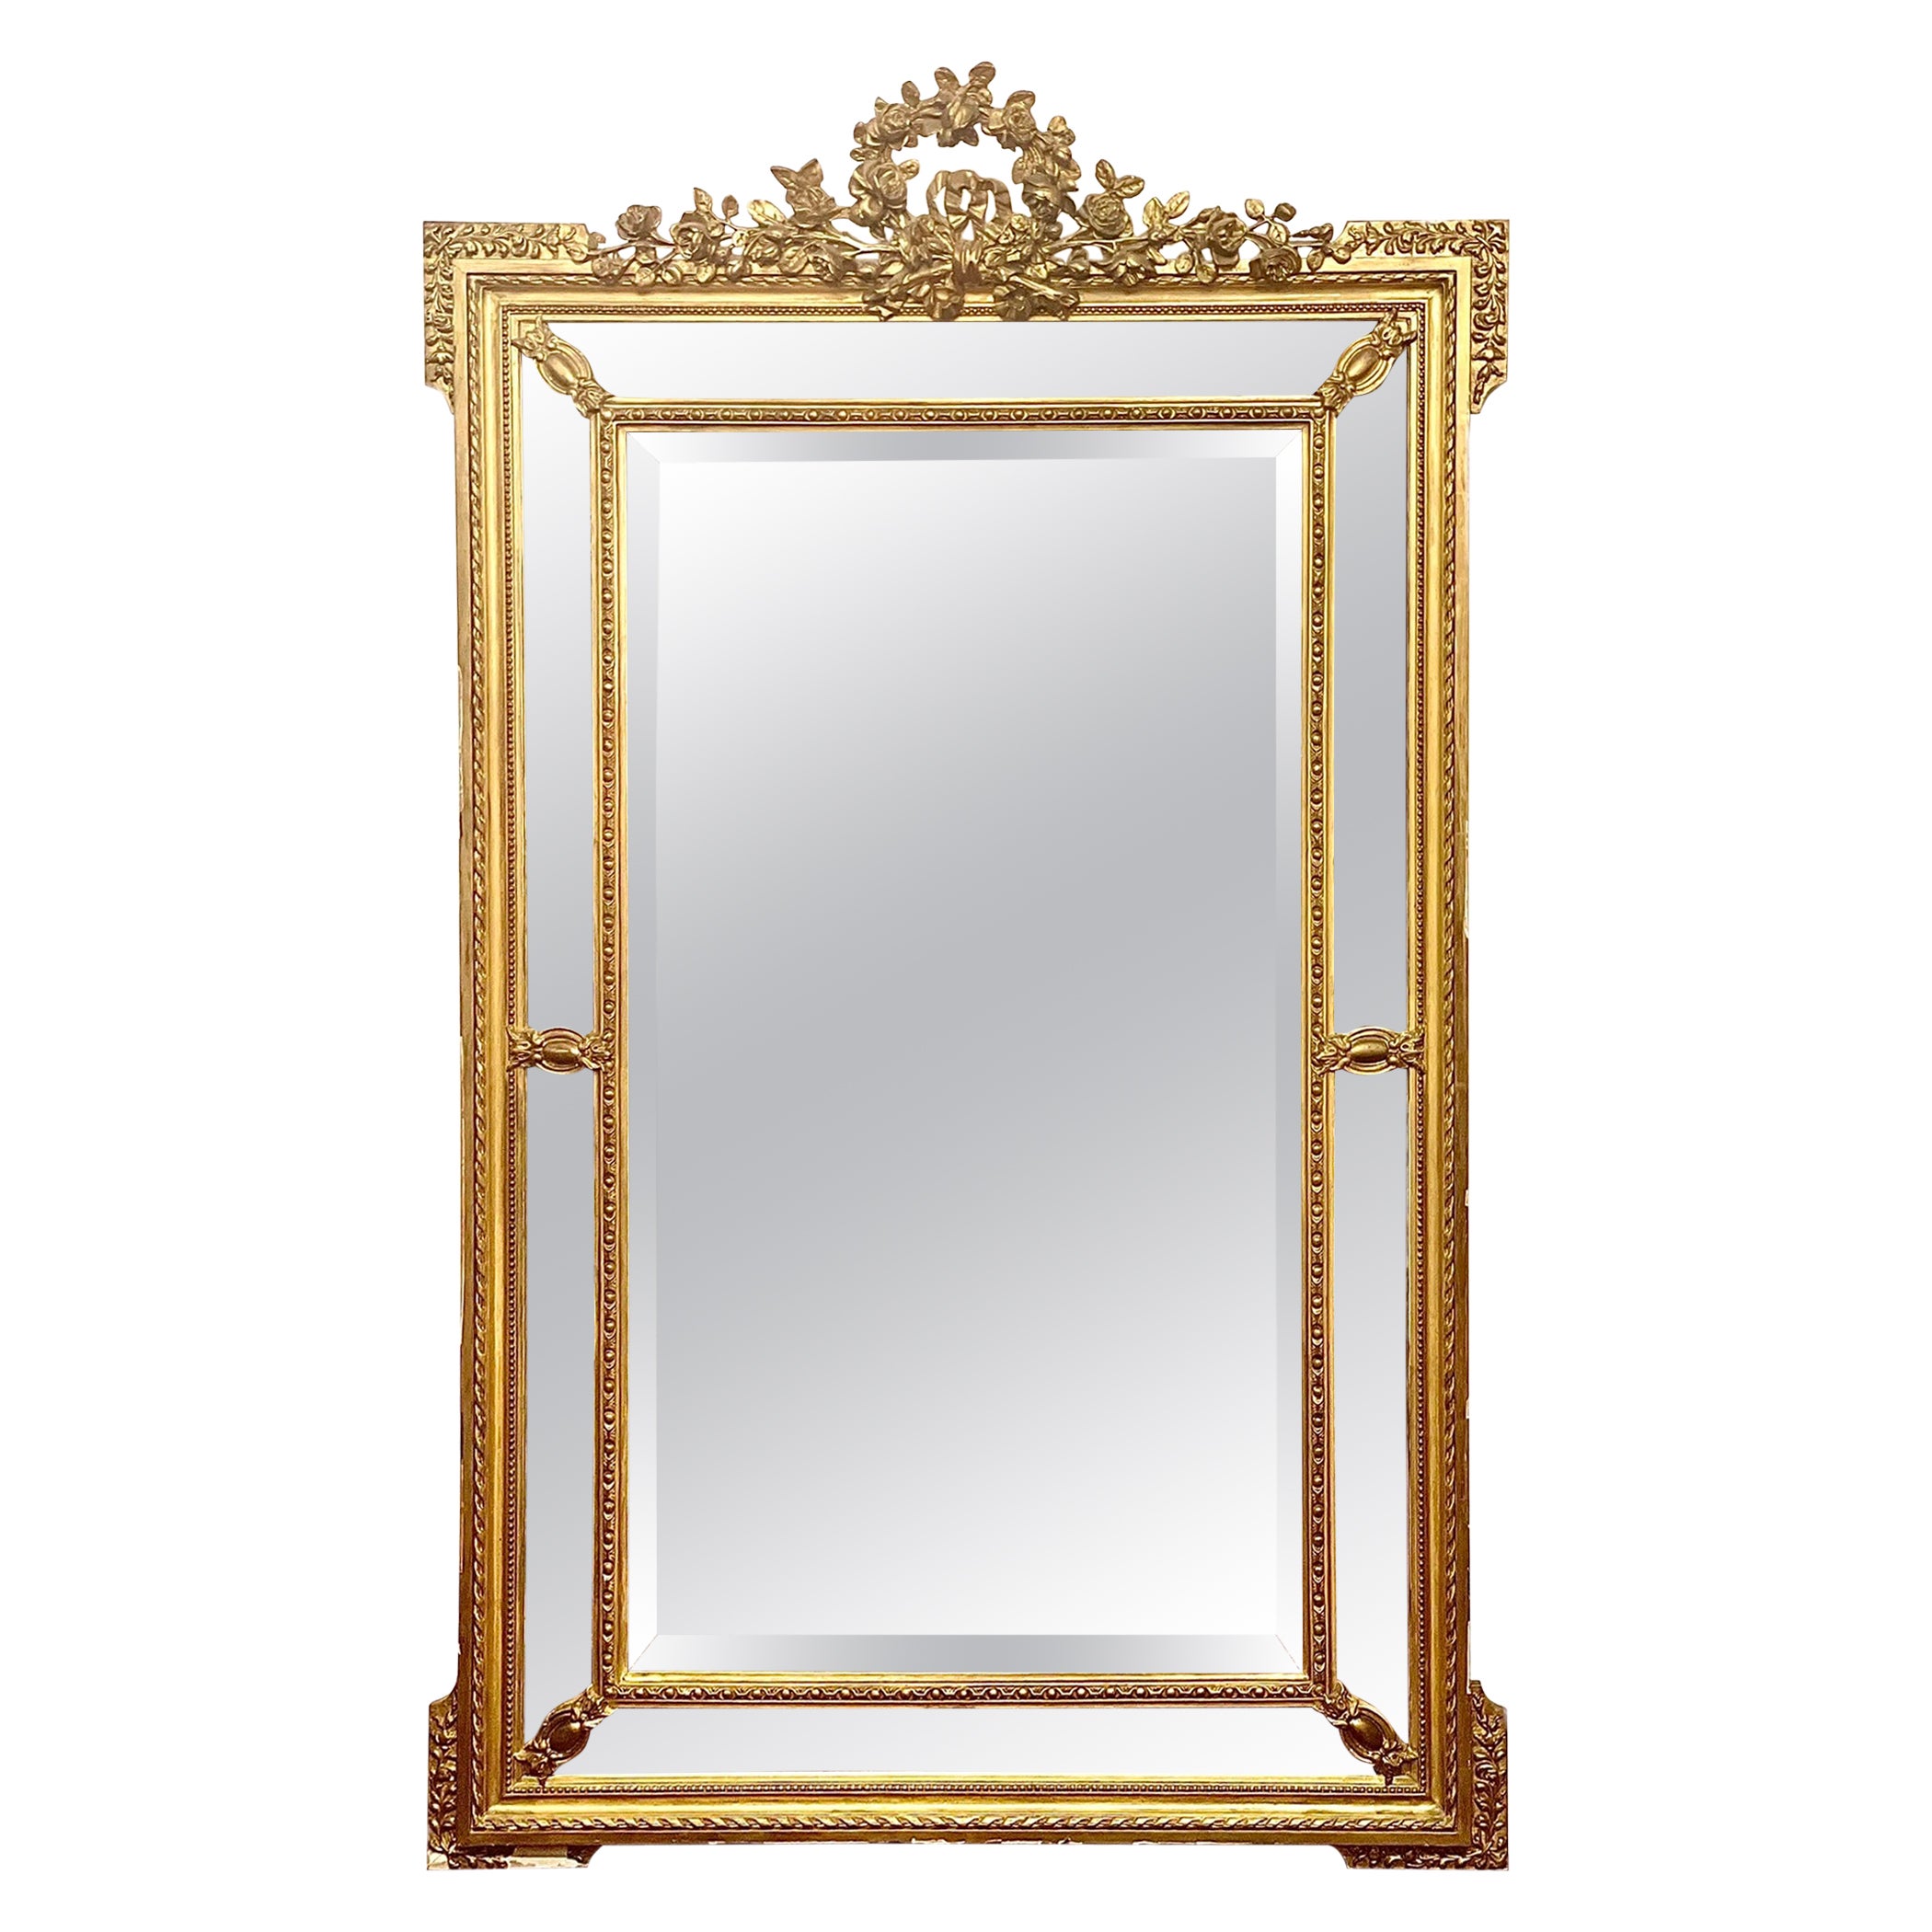 Napoleon III Period Giltwood Beveled Mirror with Parecloses